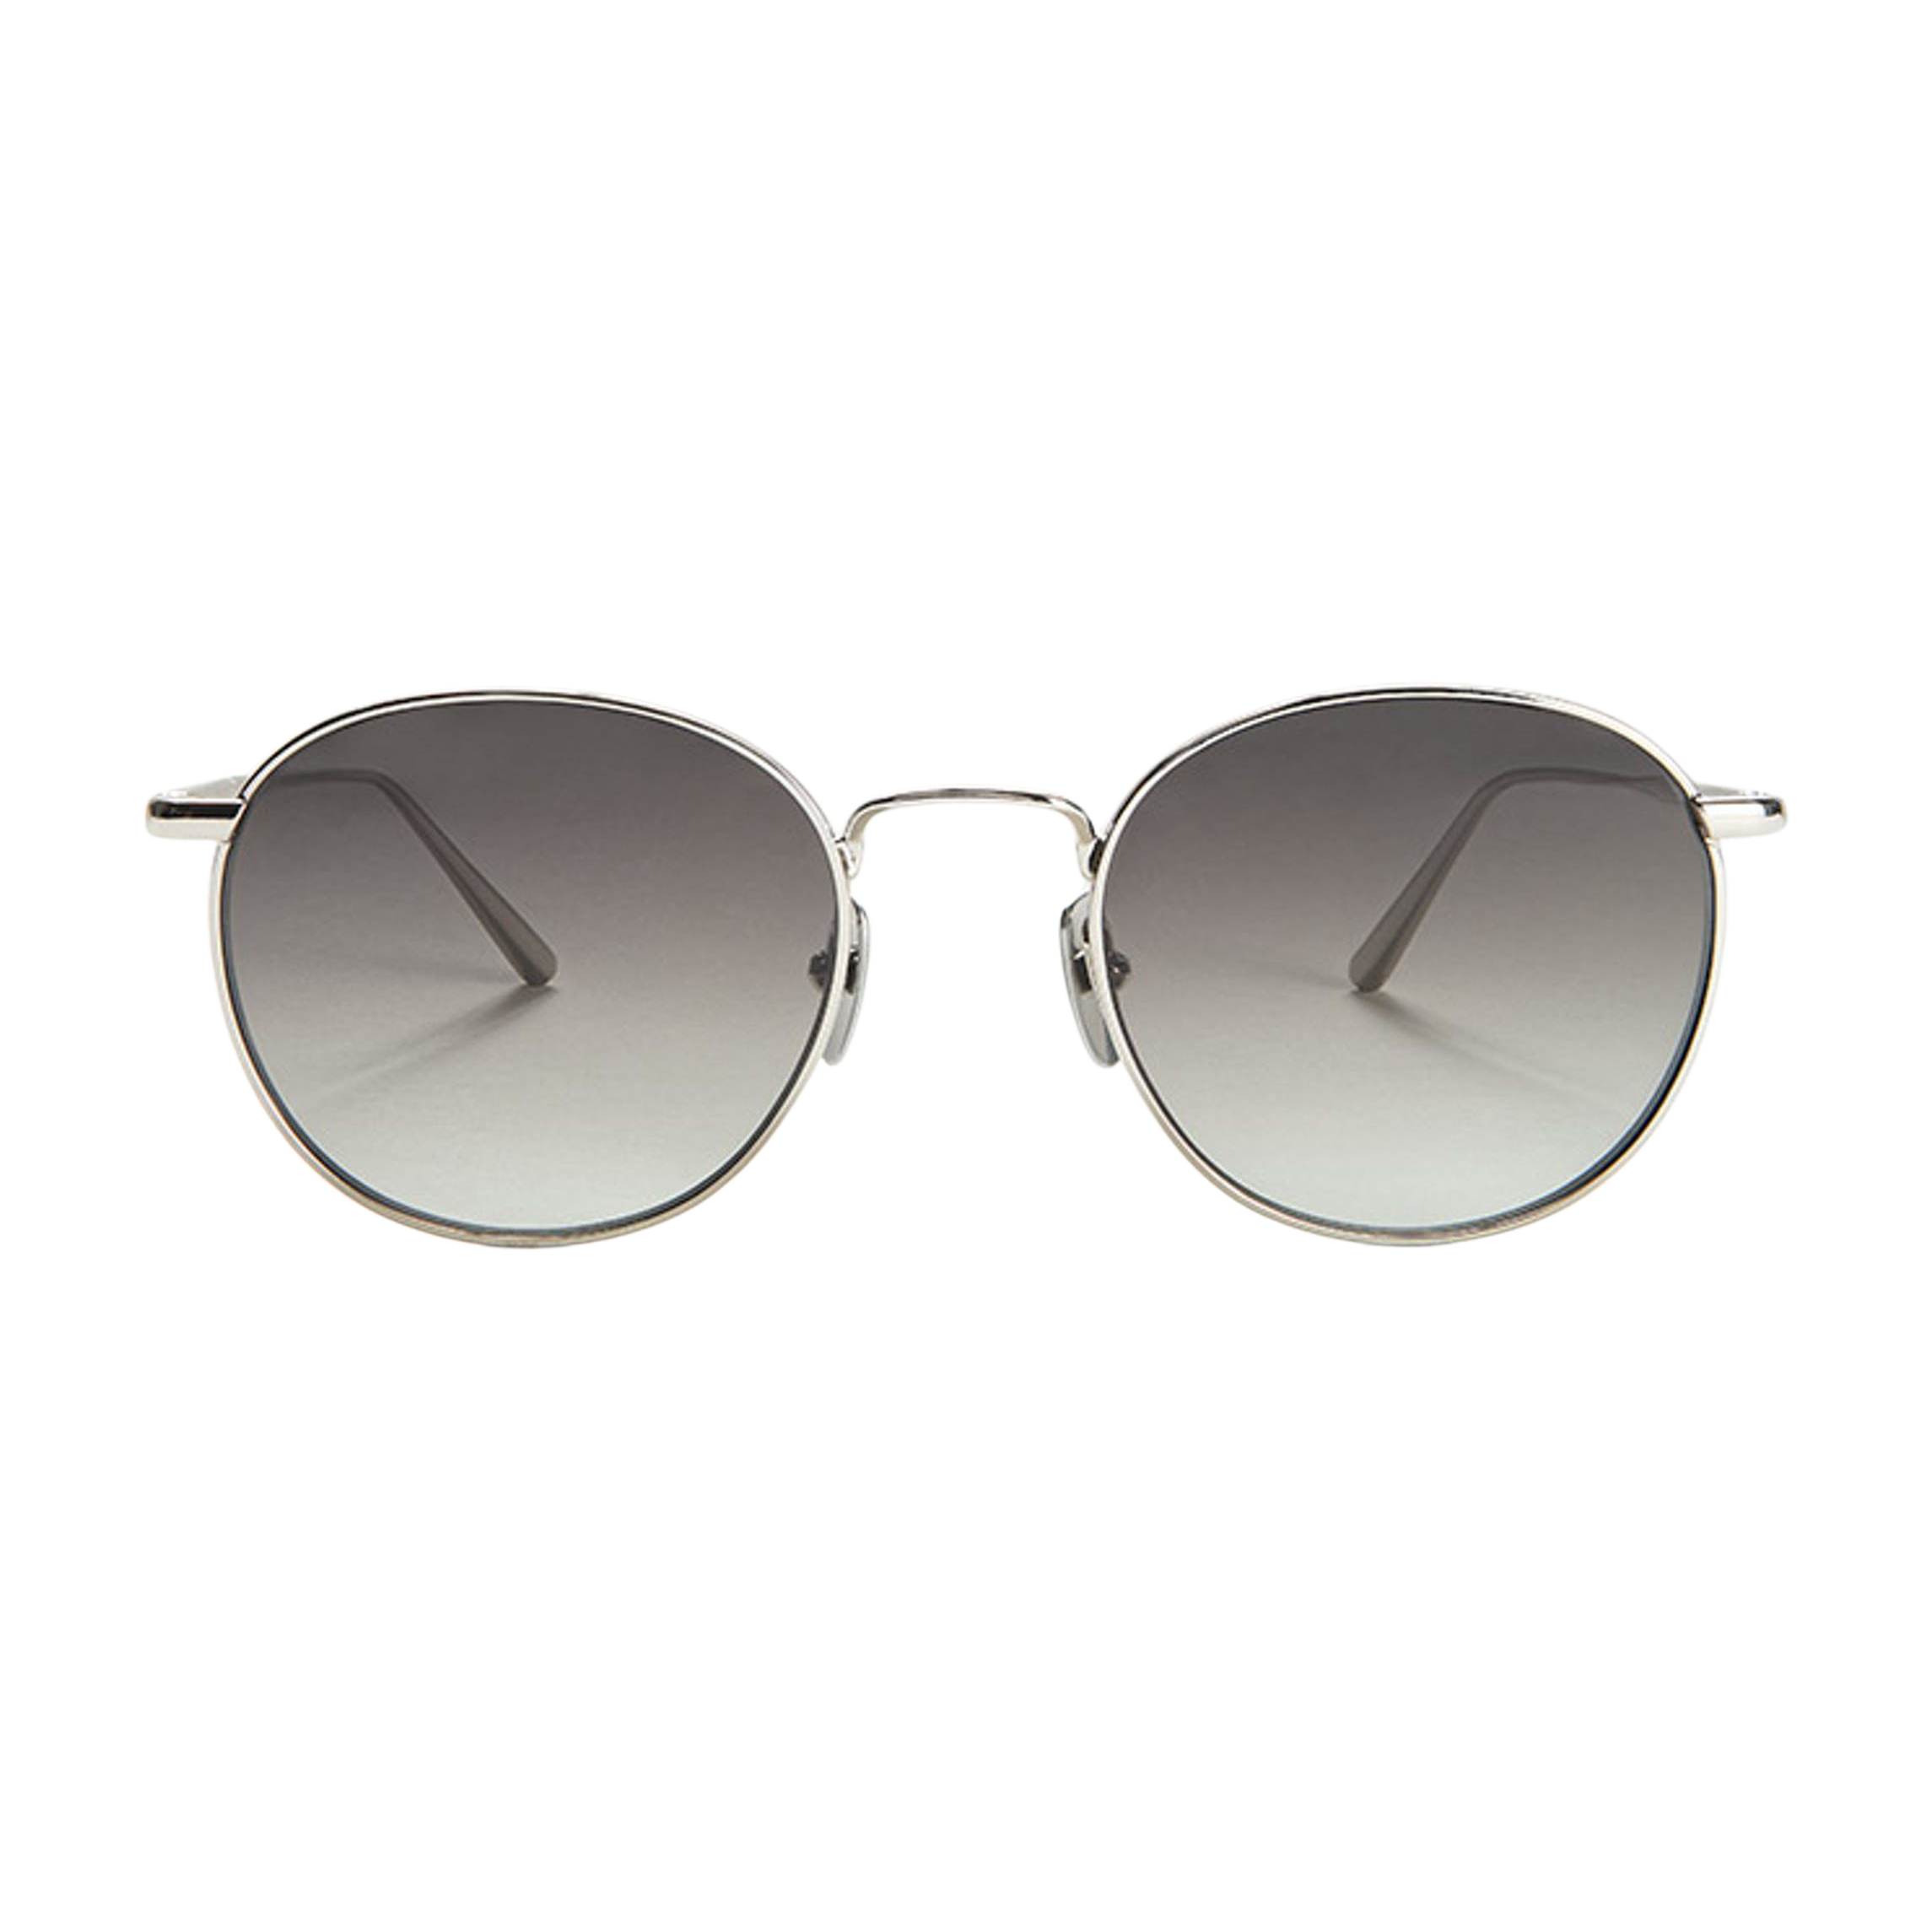 Chimi Eyewear Steel Round Grey Lenses Sunglasses 50mm Front